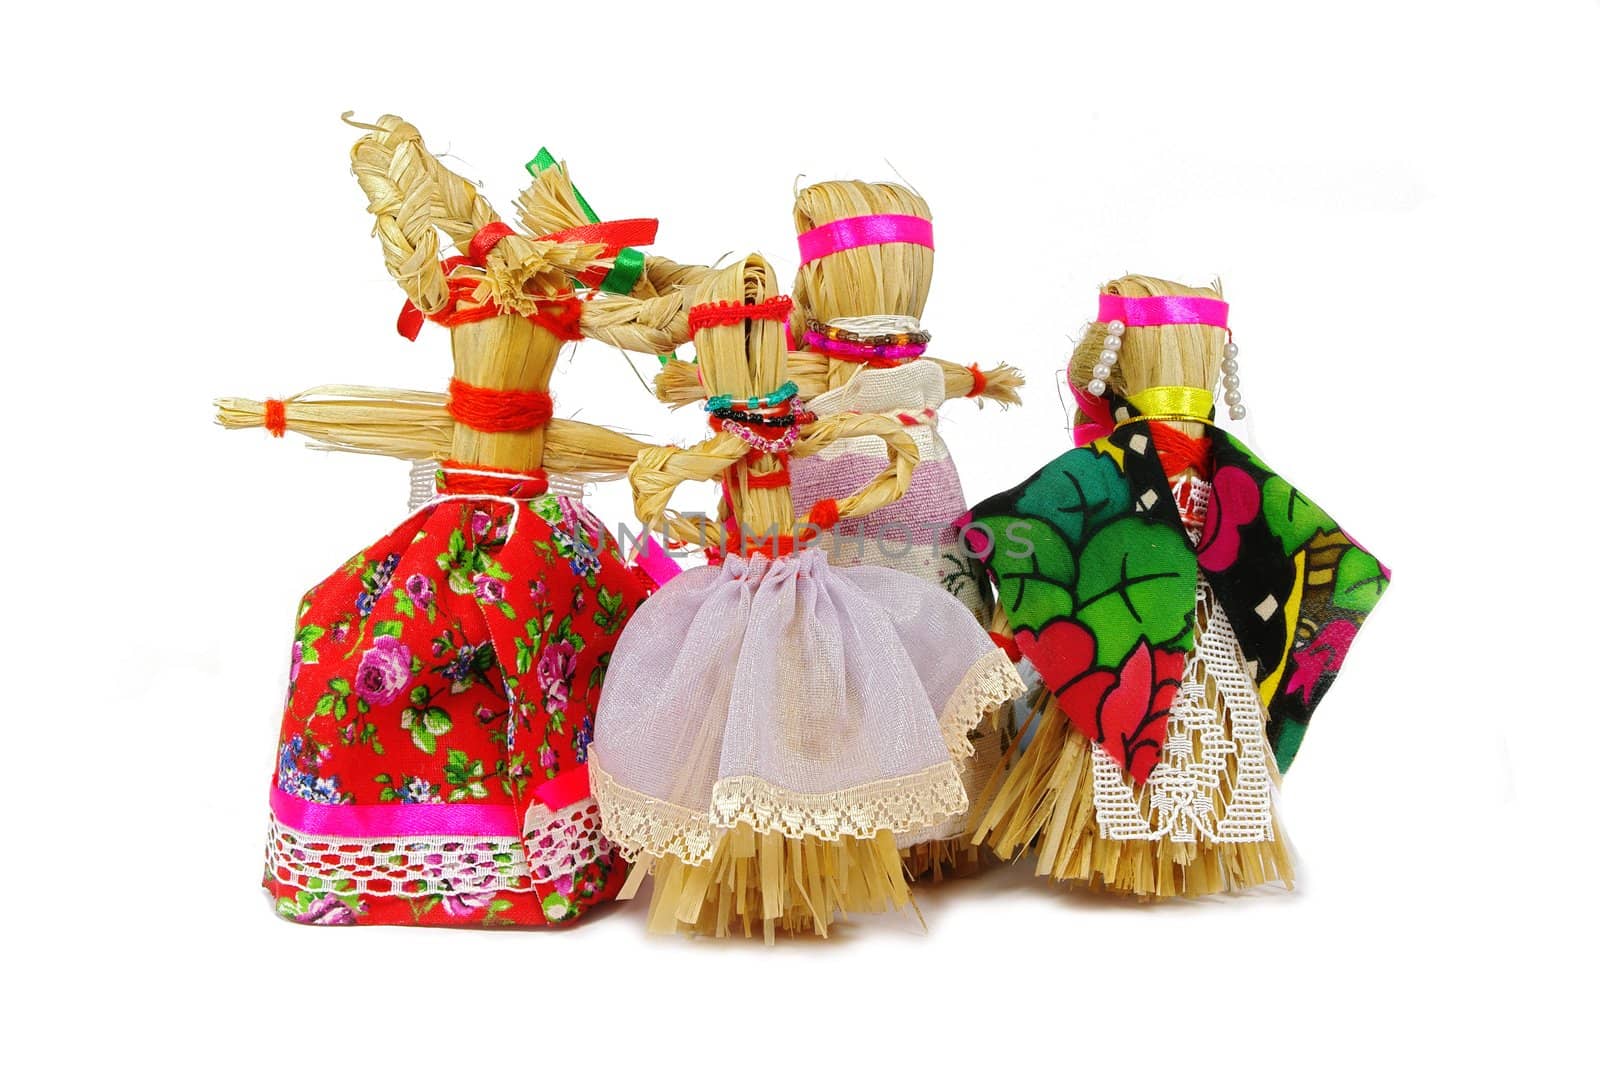 Slavic holiday carnival dolls by Vitamin